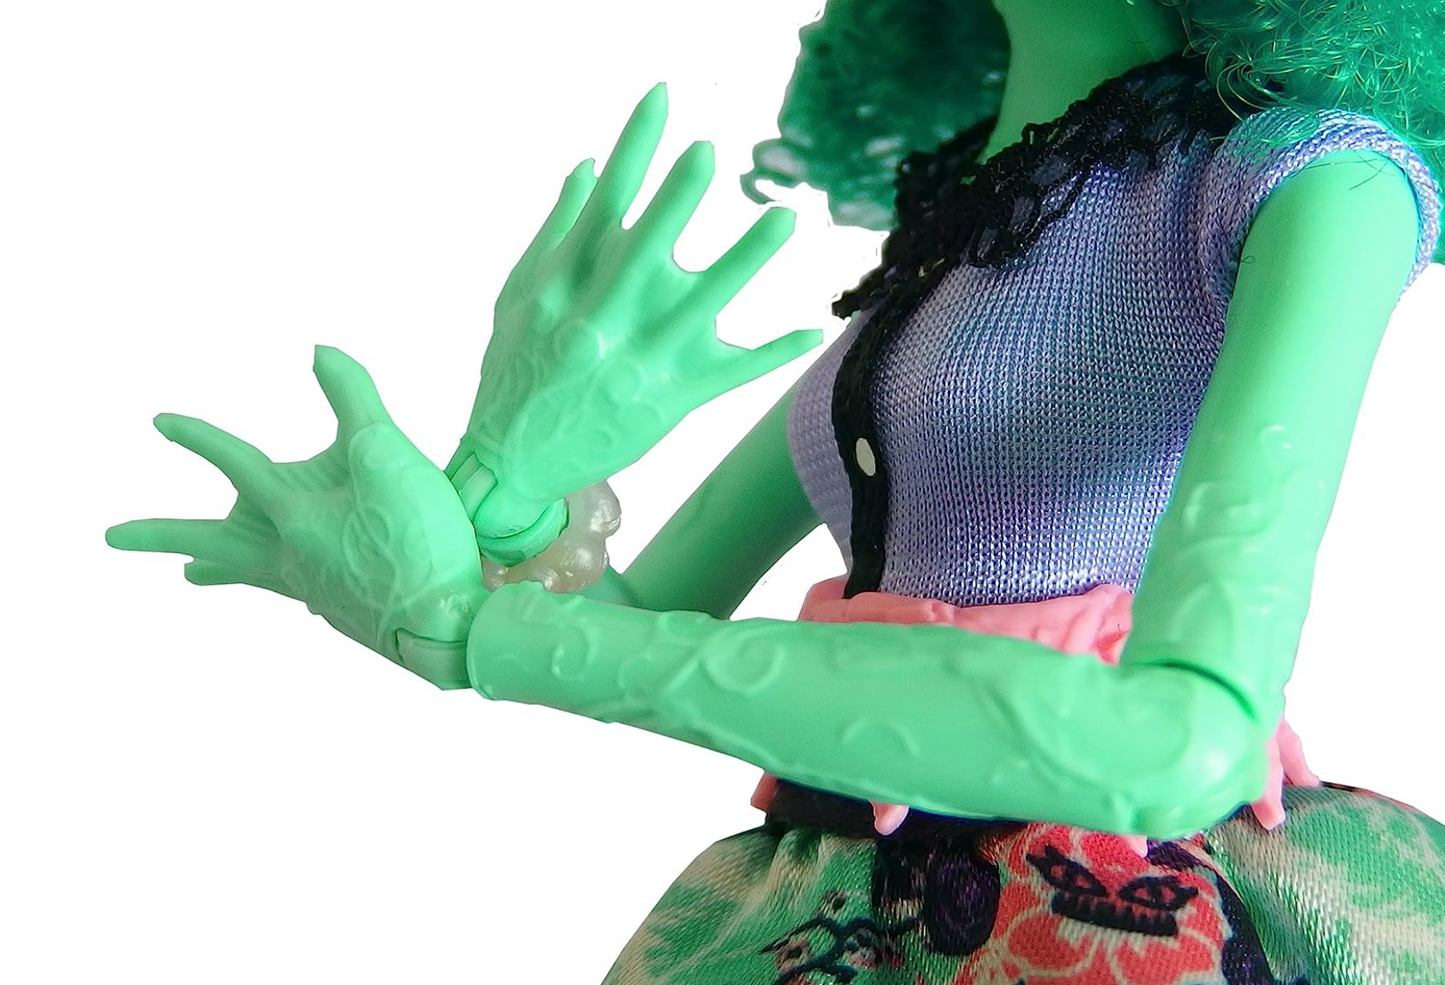 Mattel Monster High Frights, Camera, Action! Belle Honey Swamp Doll